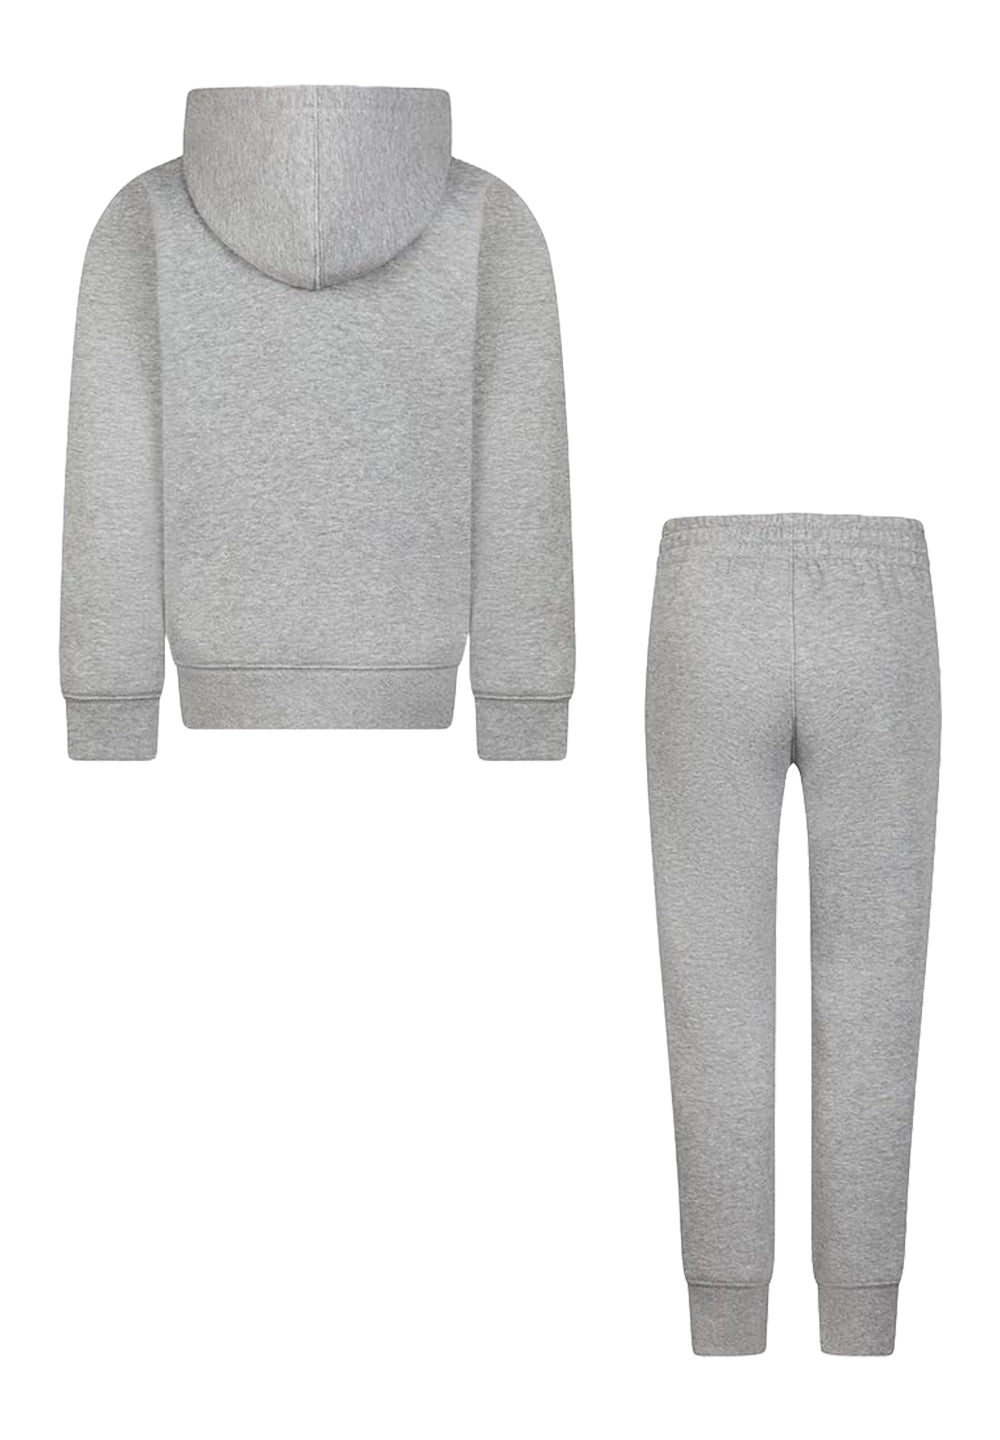 Gray sweatshirt set for boy